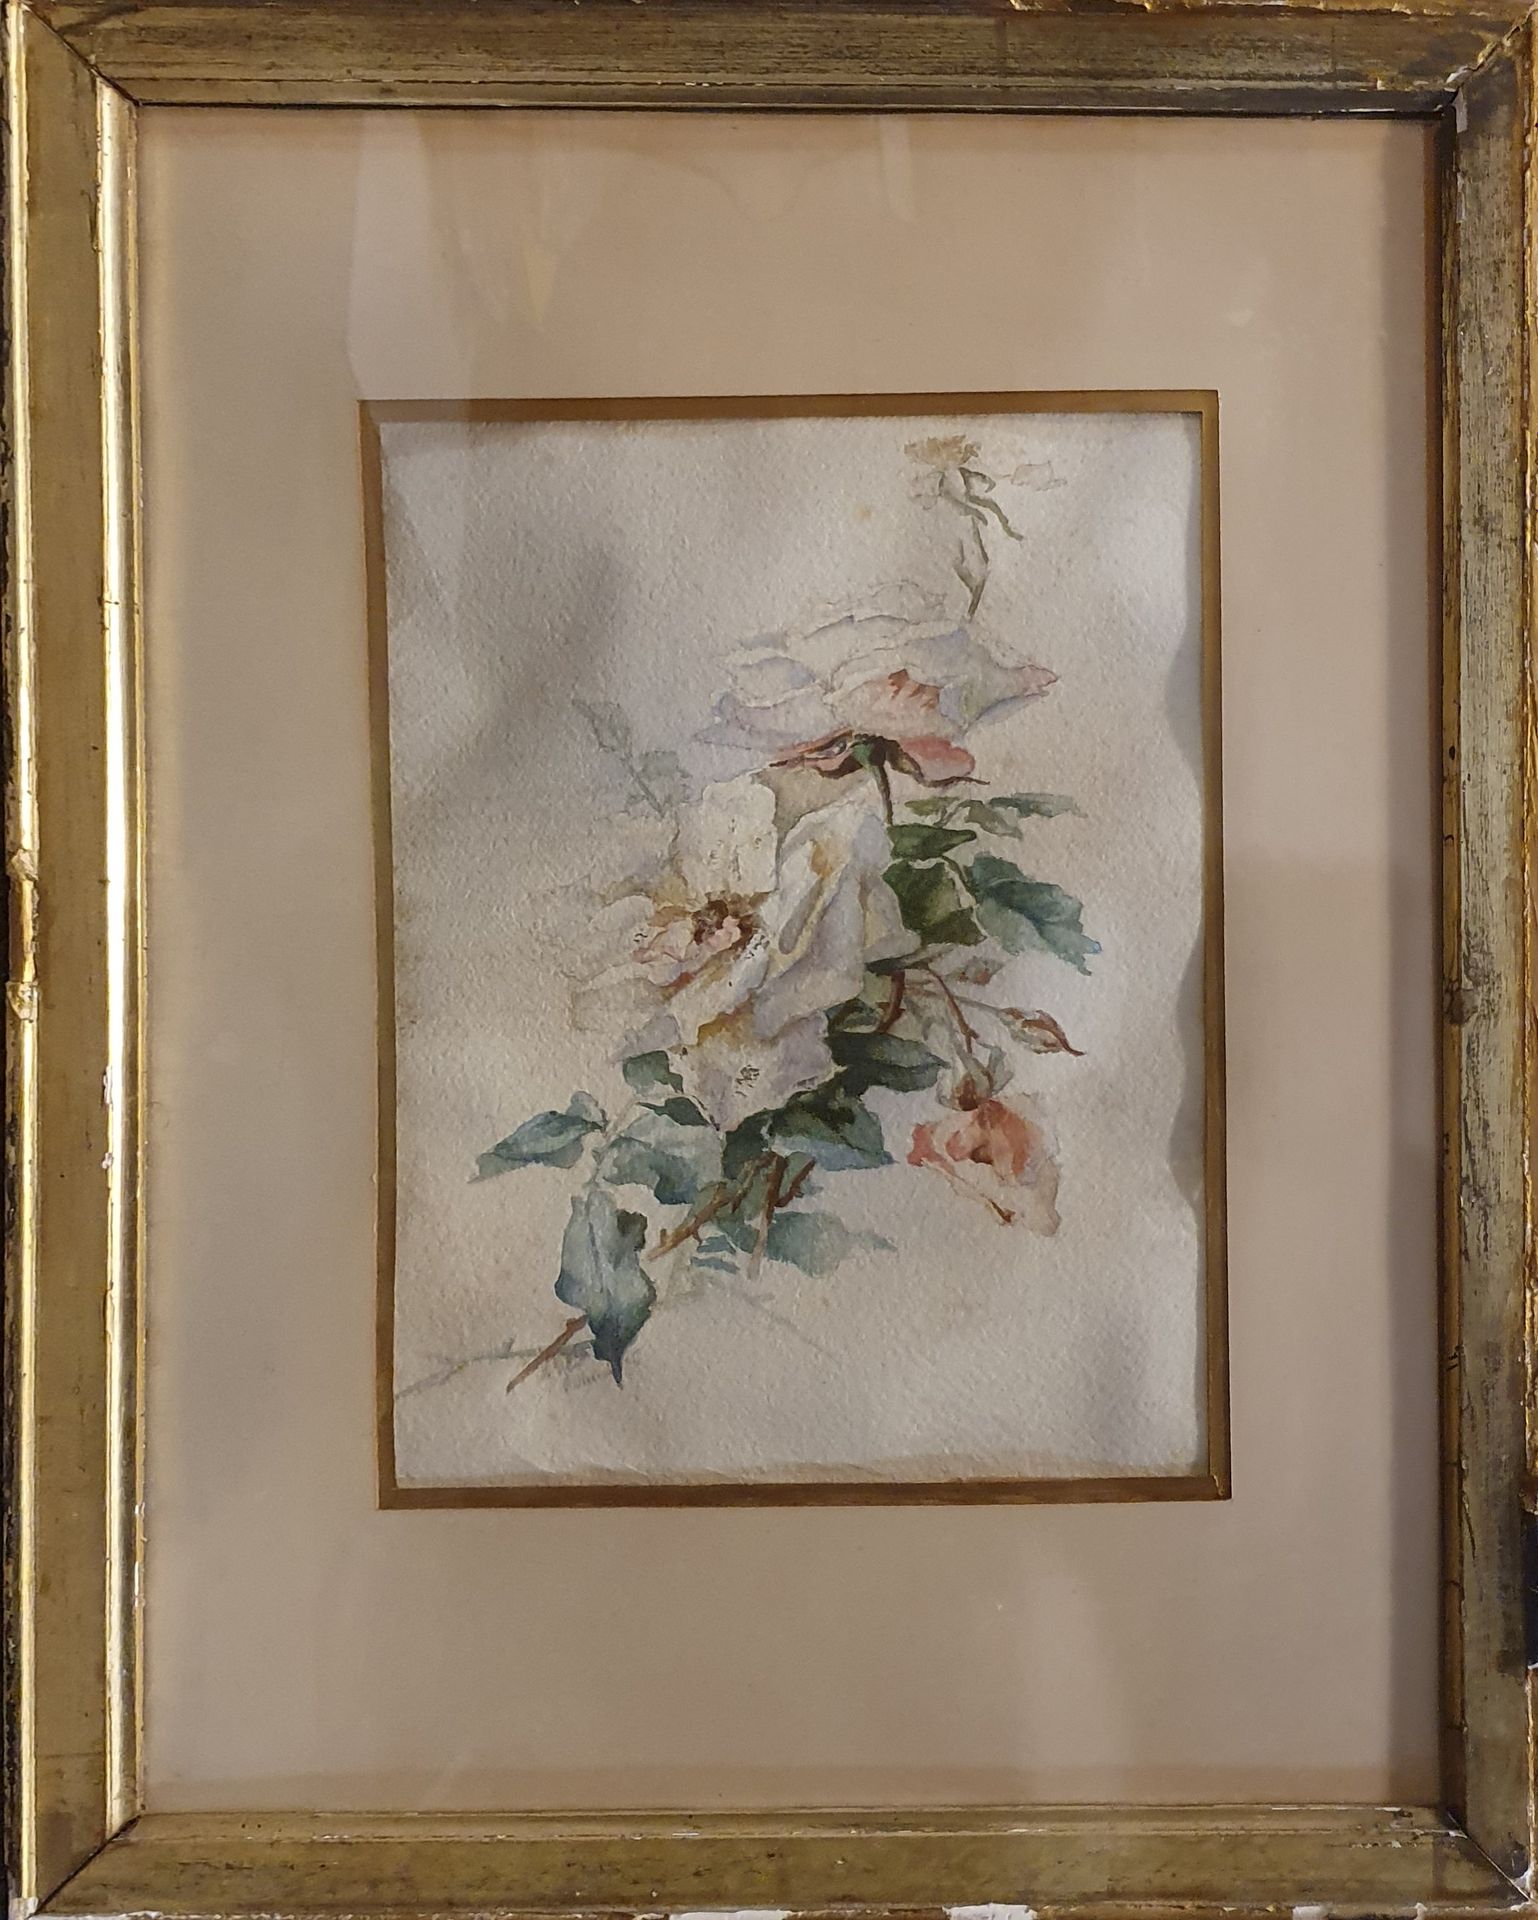 Null YVERT Marie Hector (1808-?)

flores, noviembre 96

Acuarela sobre papel, fi&hellip;